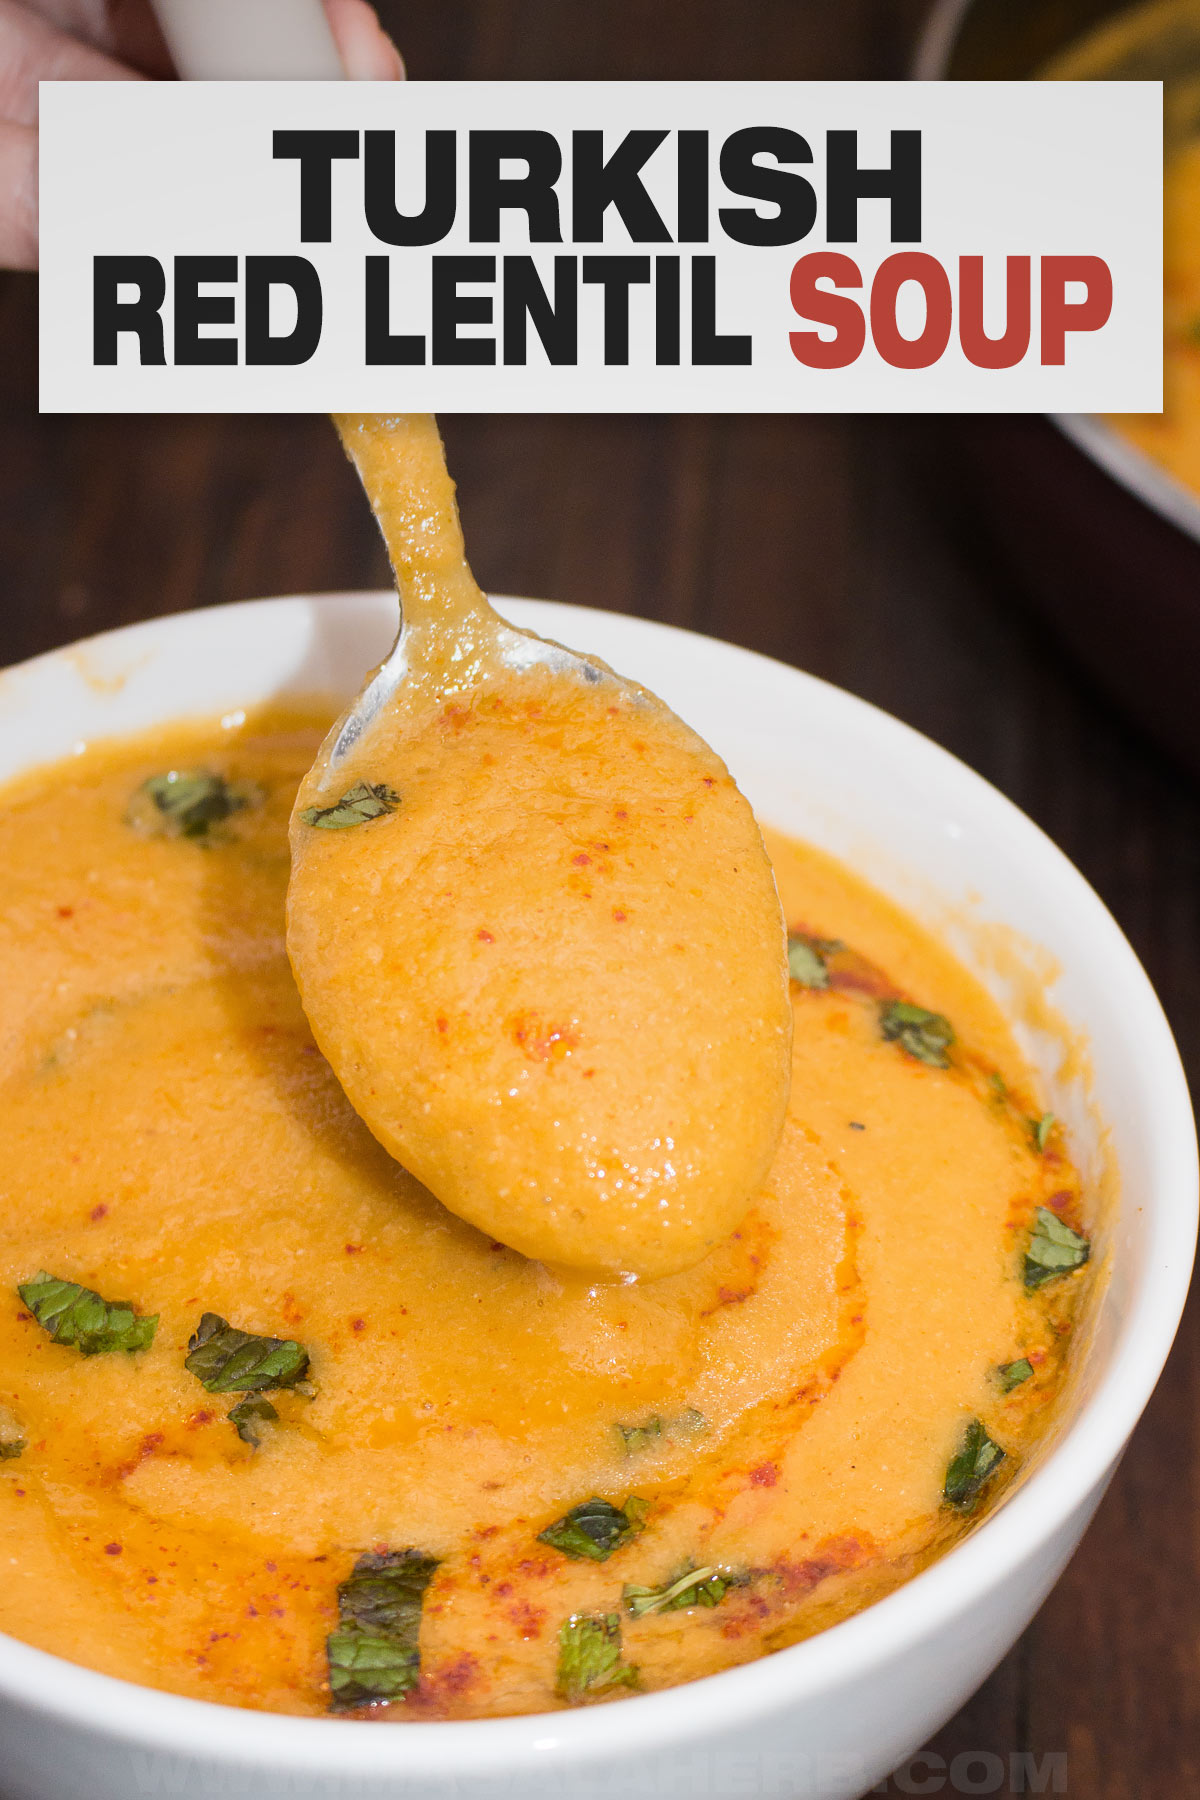 Turkish Red Lentil Soup Recipe cover image